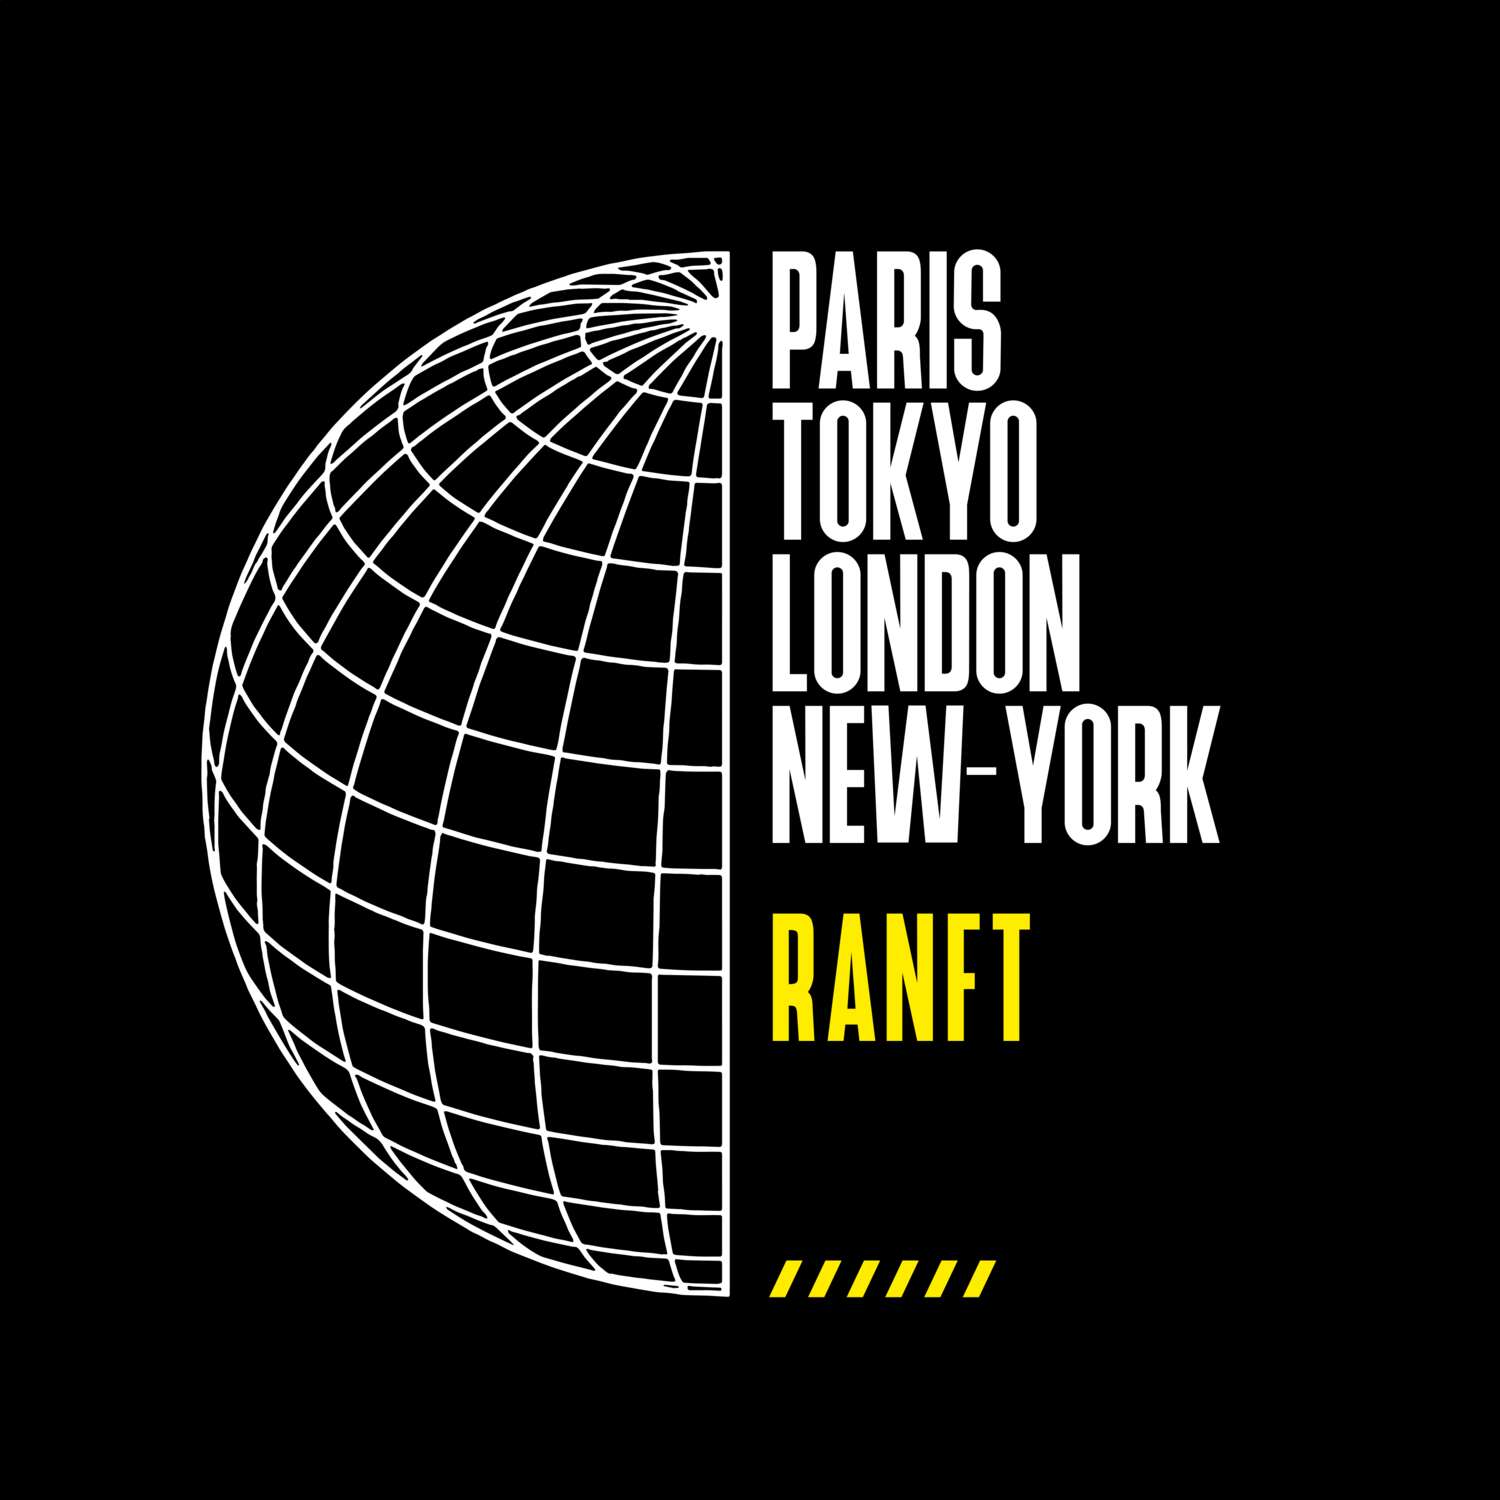 Ranft T-Shirt »Paris Tokyo London«